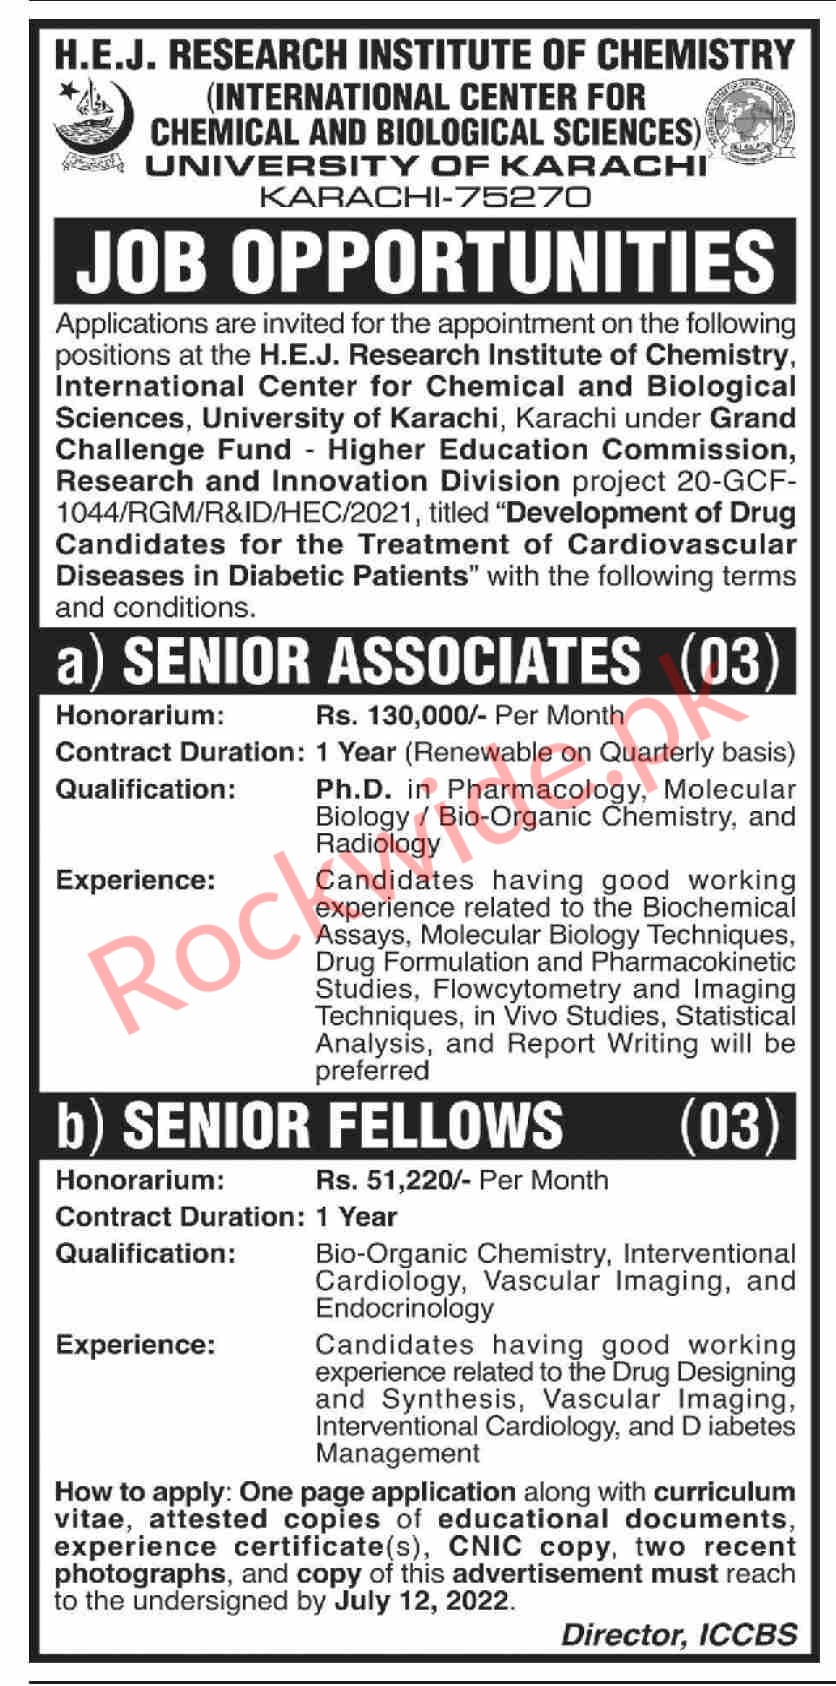 The University of Karachi jobs